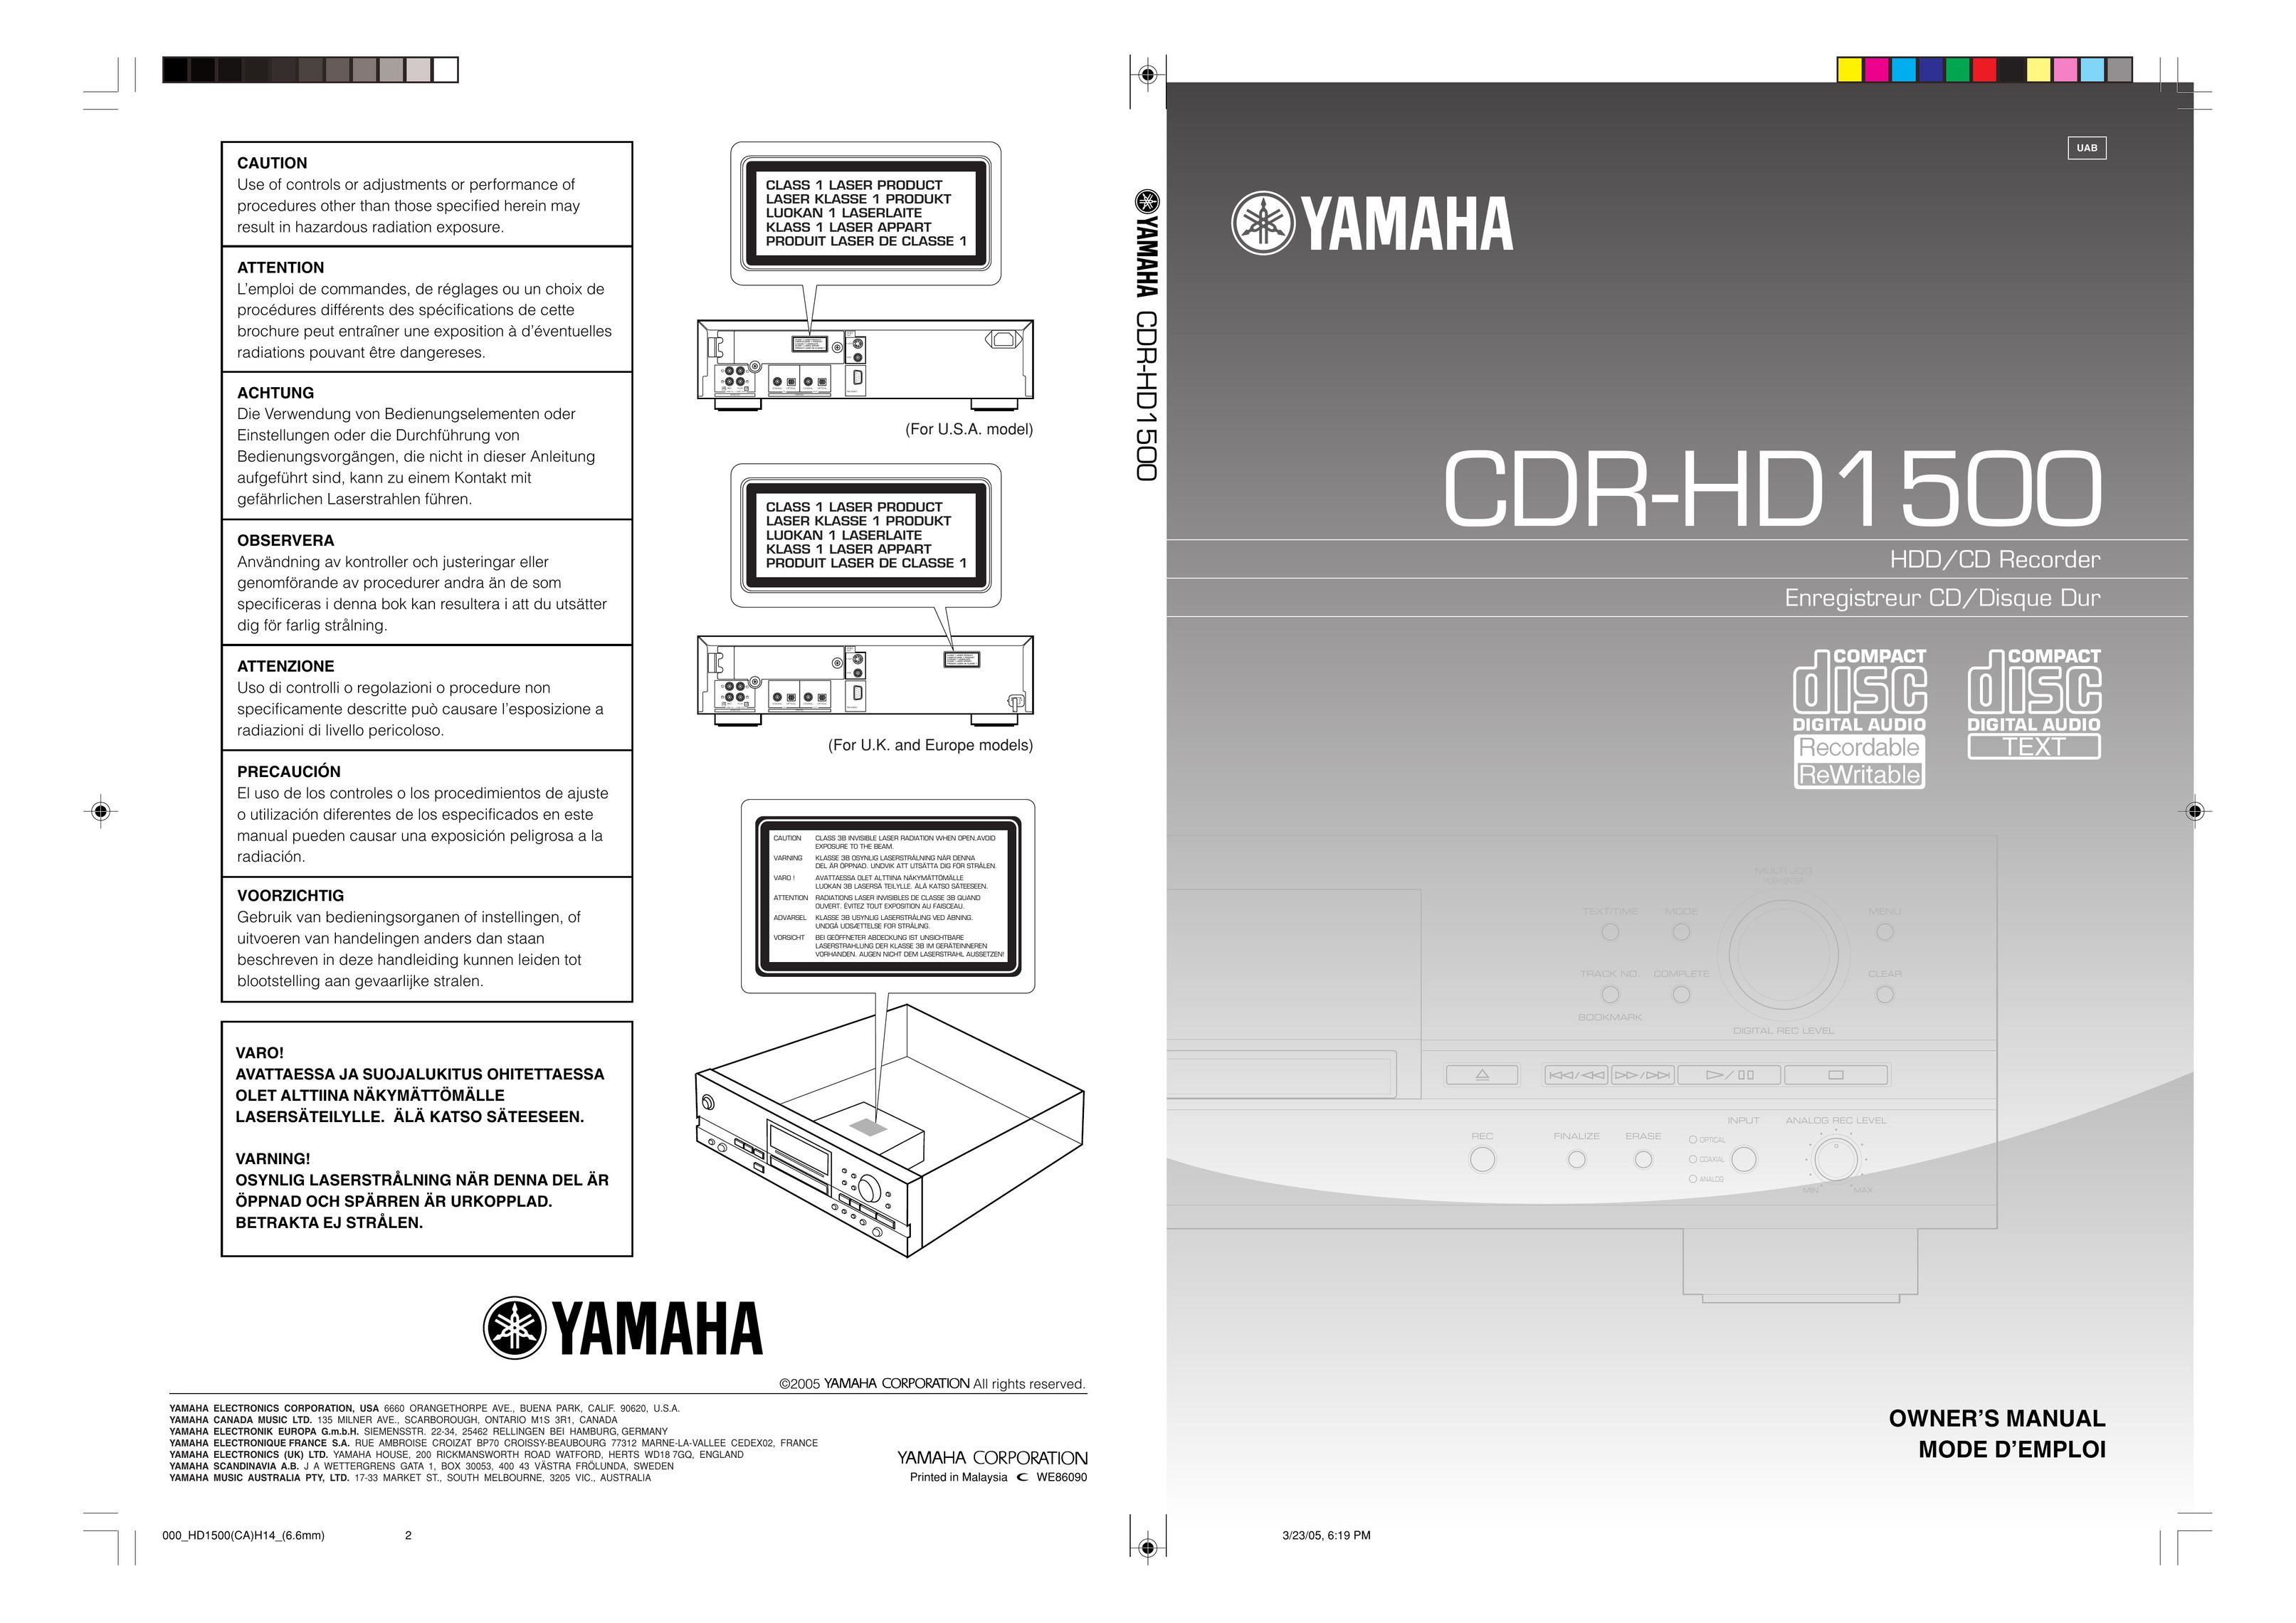 Yamaha CDR-HD 1500 CD Player User Manual